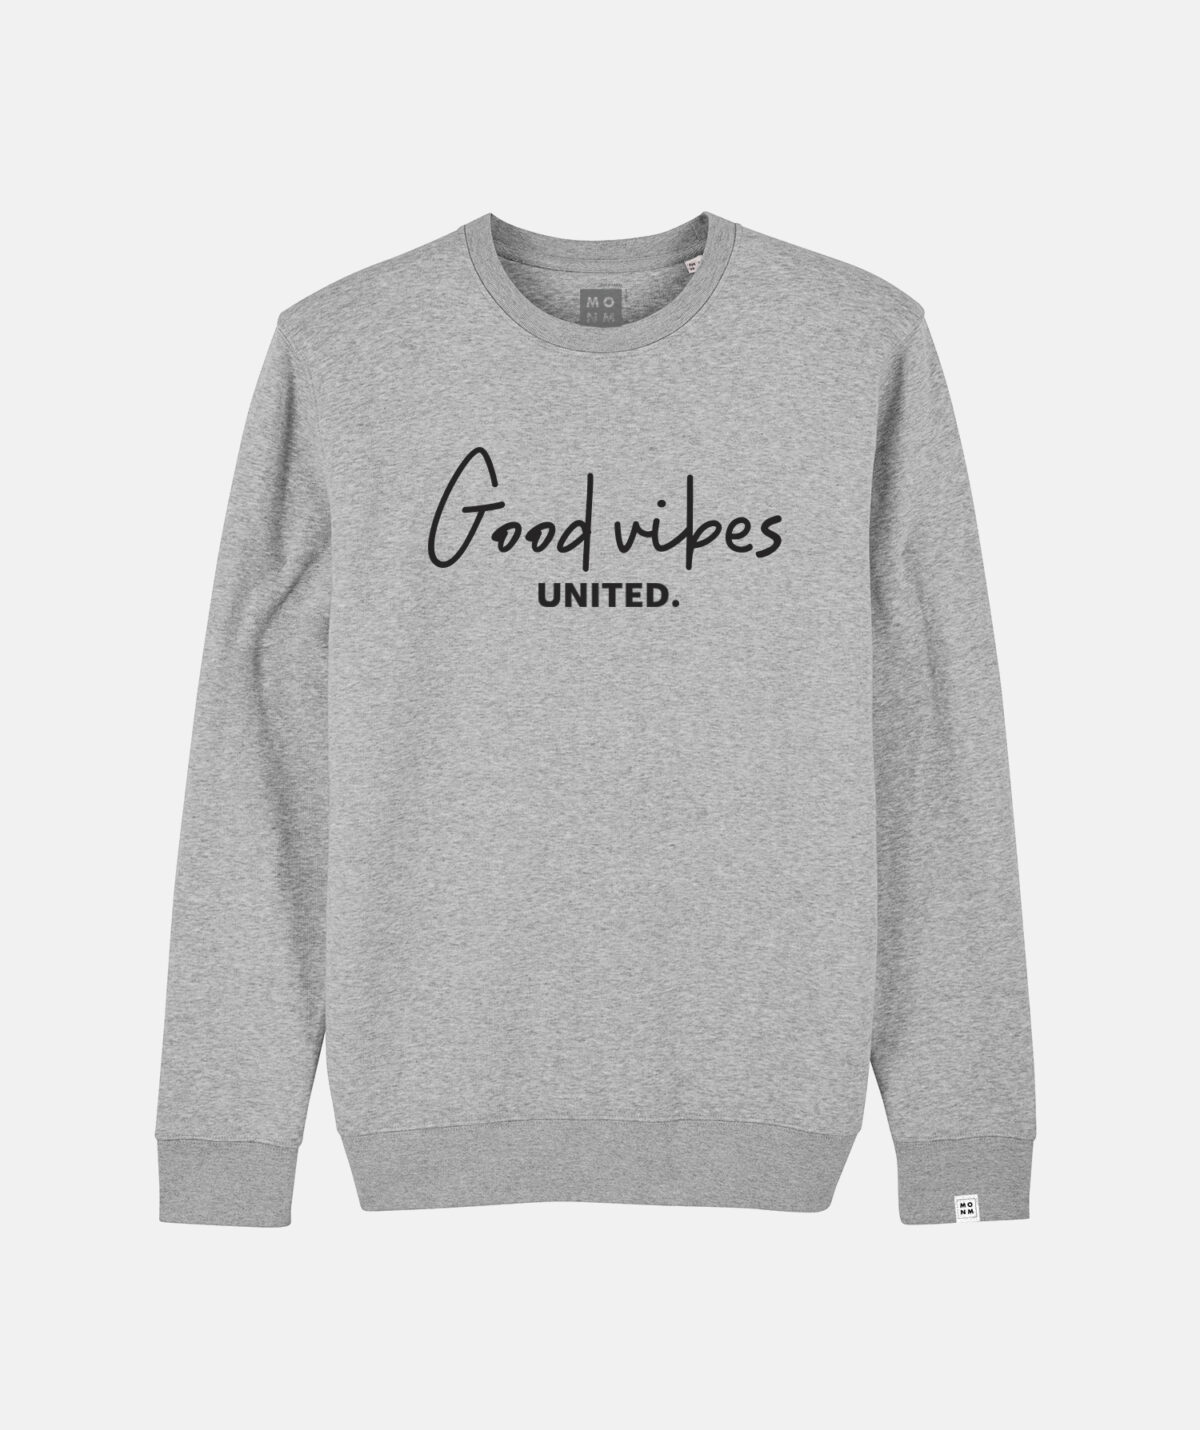 Good Vibes united sweater van Mangos on Monday